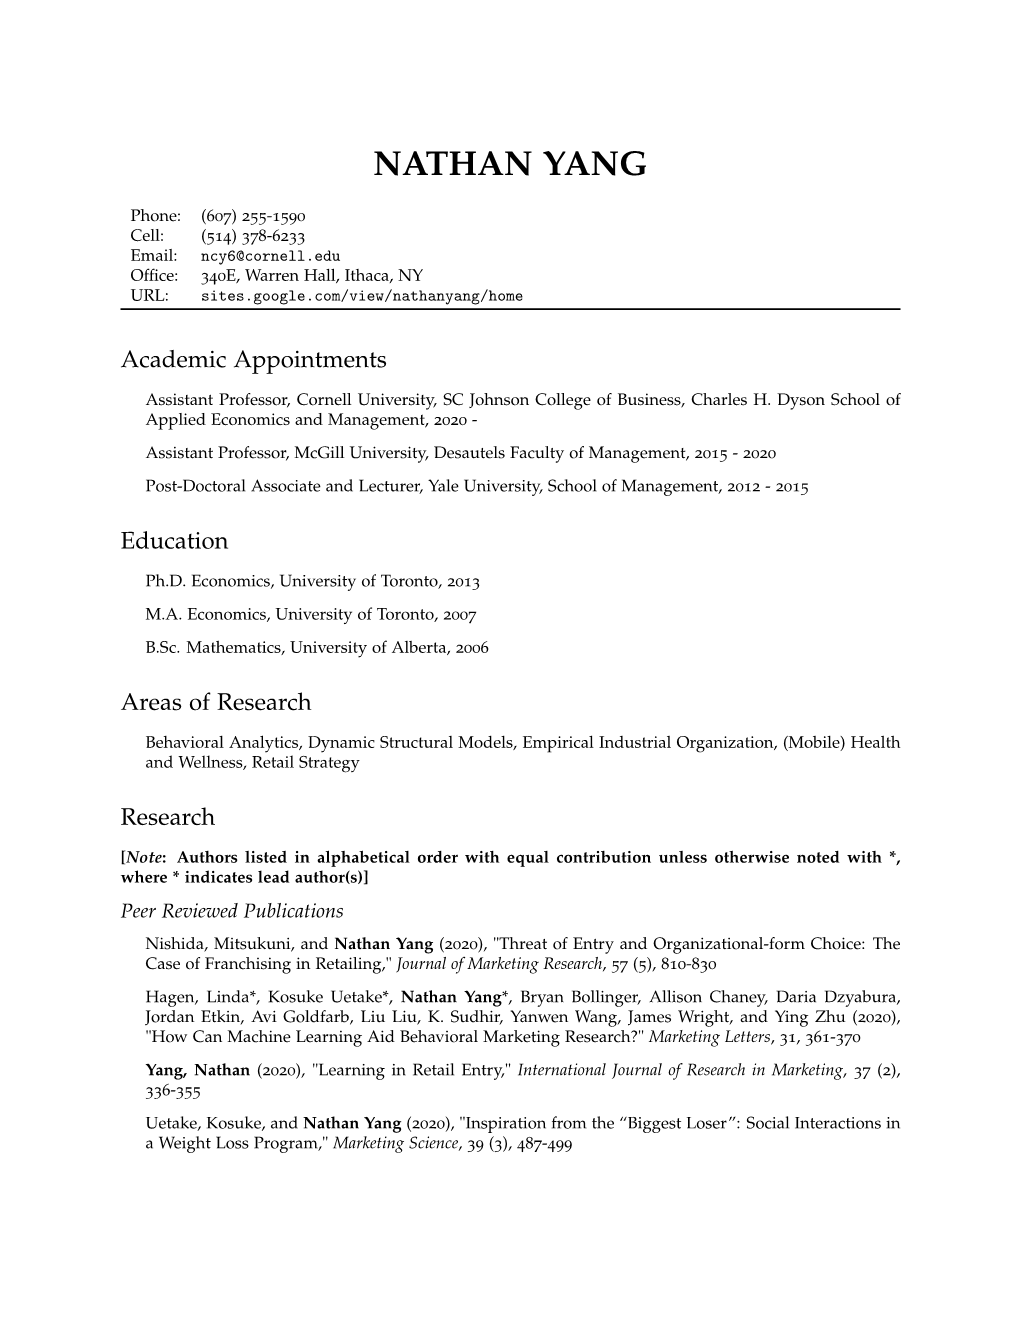 NATHAN YANG: Curriculum Vitae